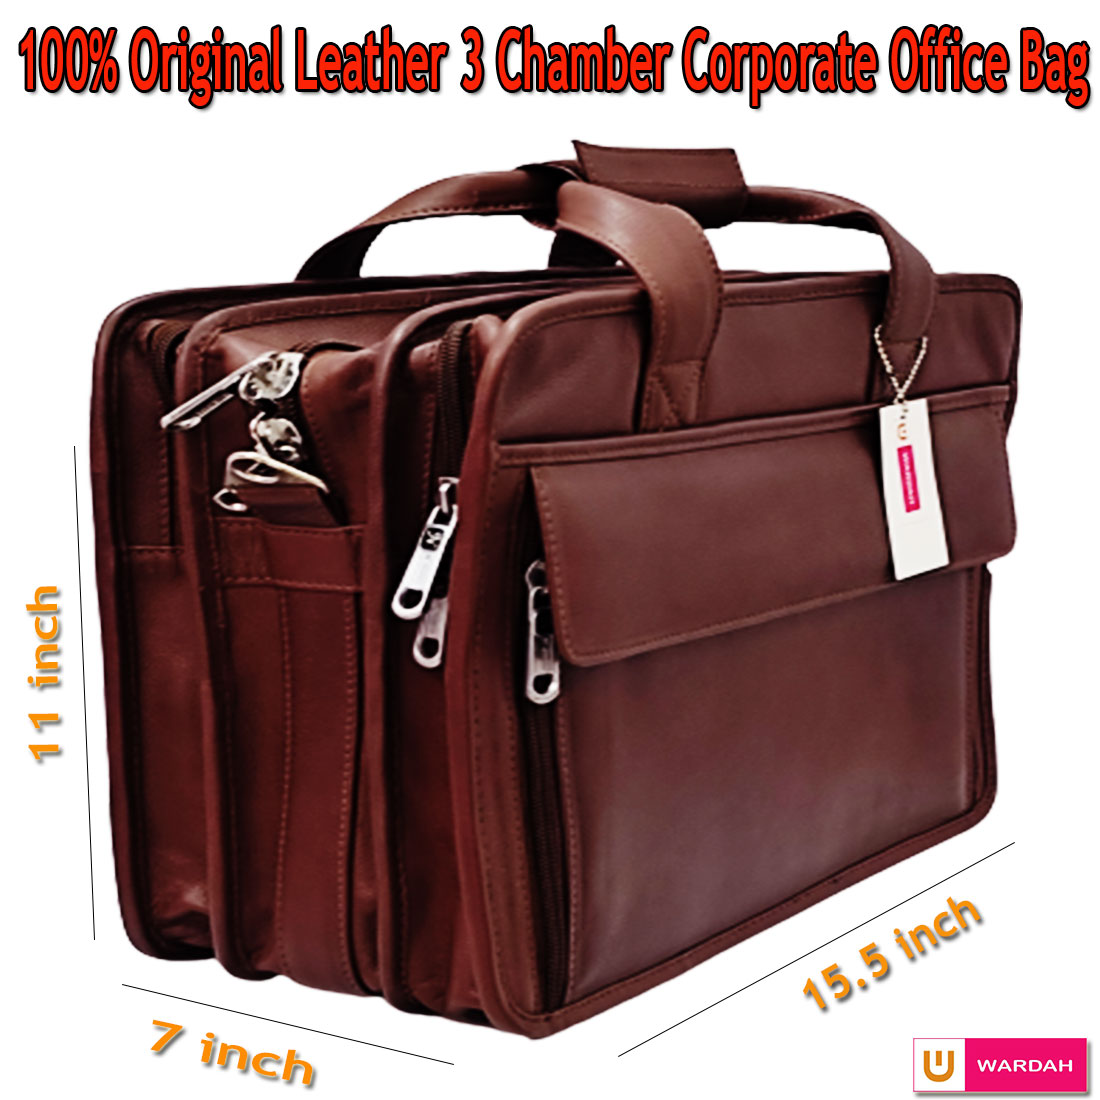 ashwood leather bag tk maxx